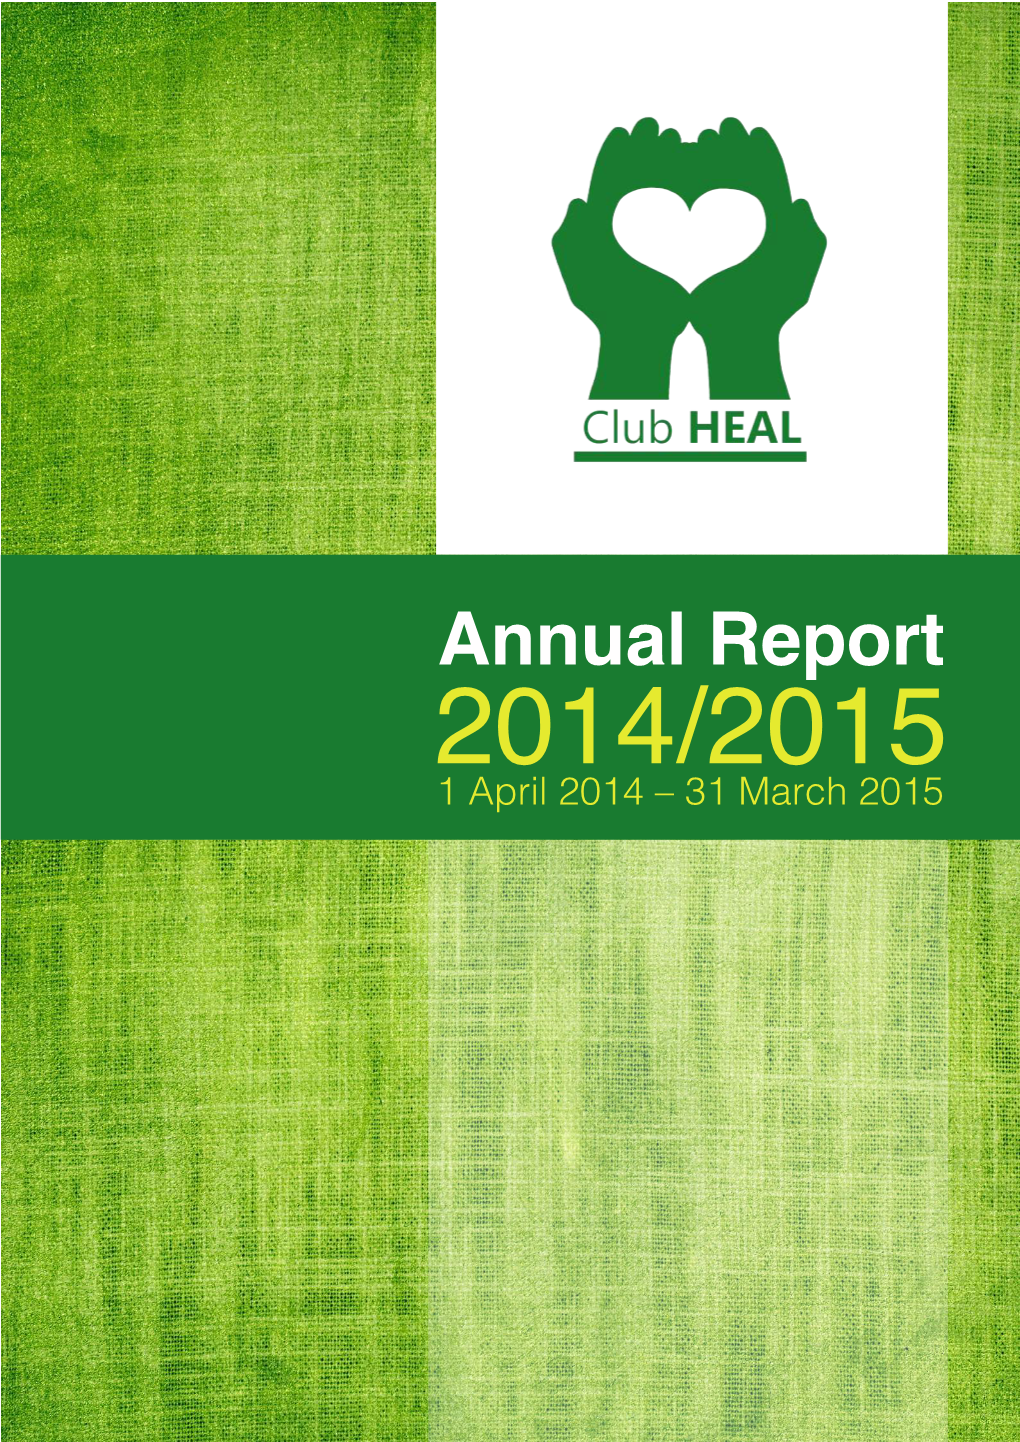 2014/2015 Annual Report